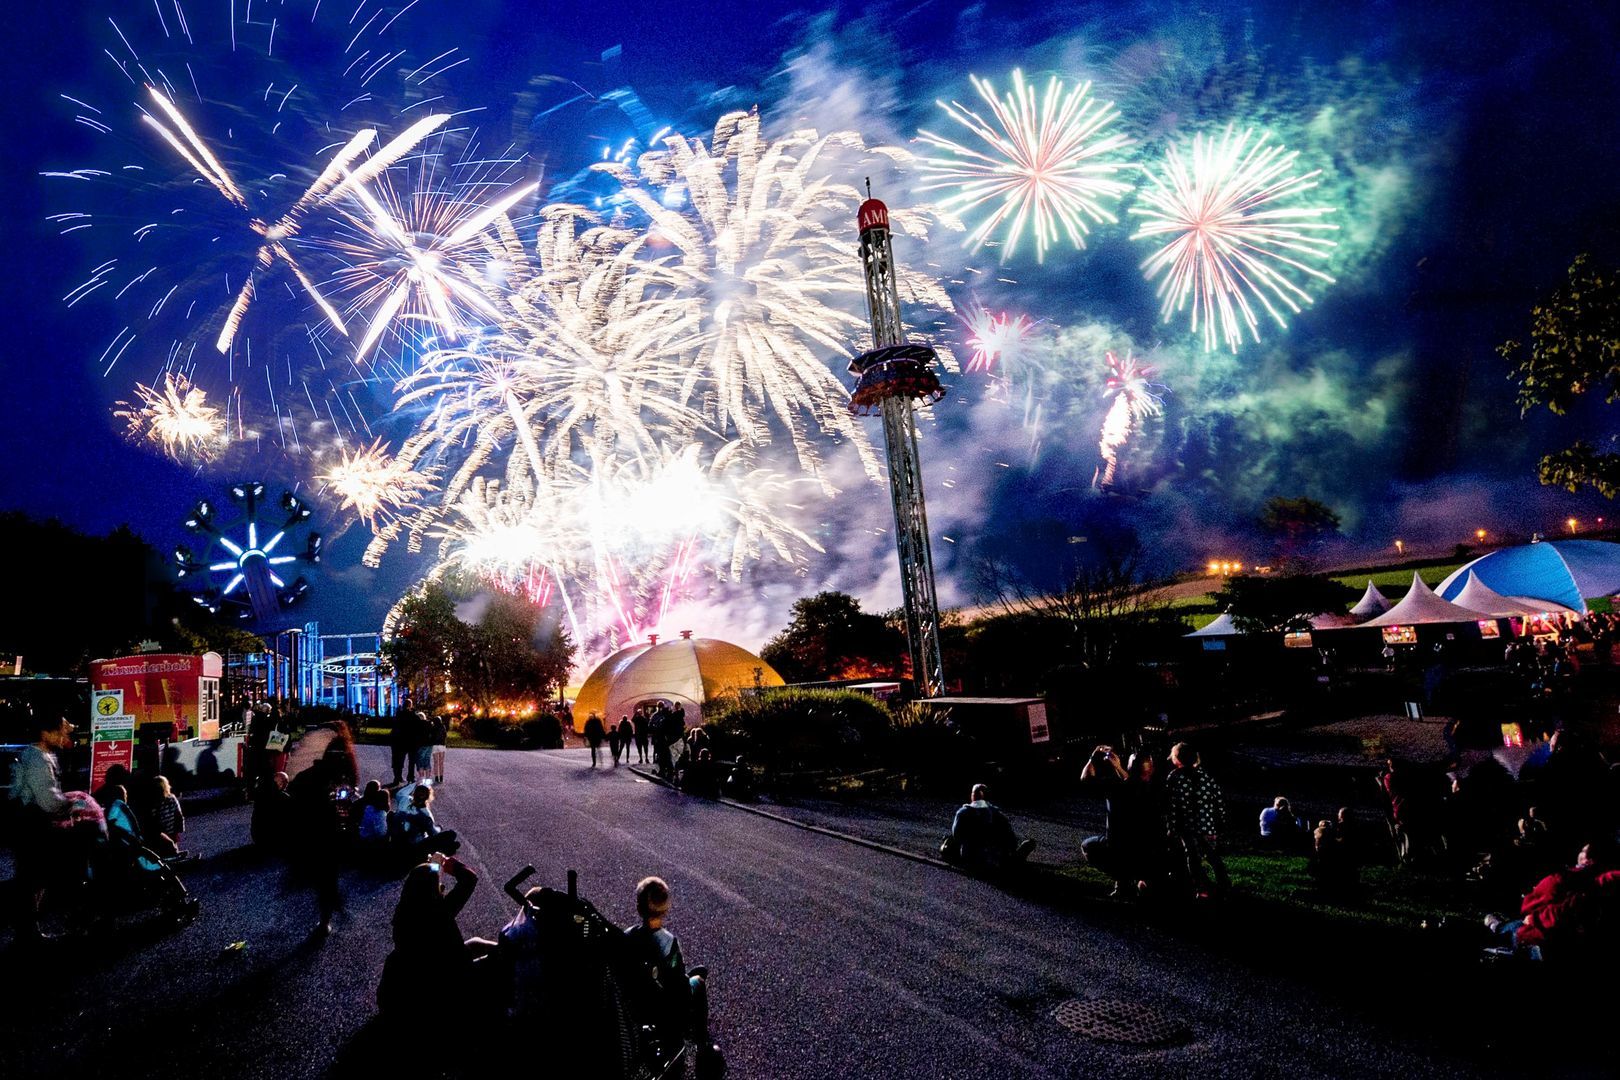 Summer Family Fun and Fireworks at Flambards, Cornwall, England, United Kingdom